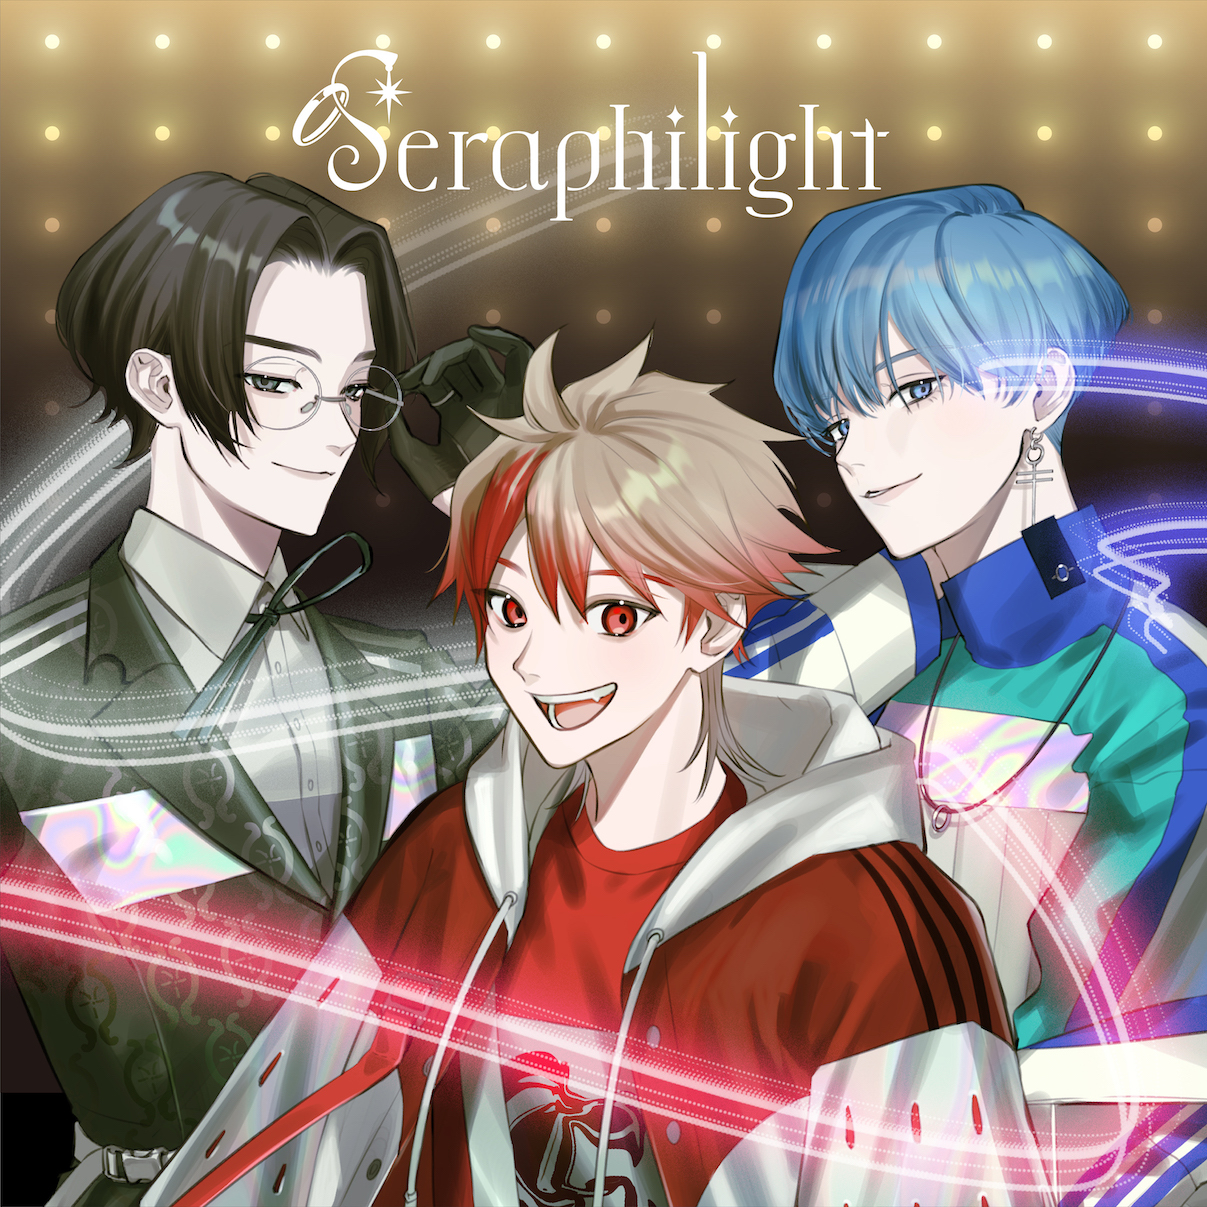  Seraphilight 1st Digital Single 「THE SERAPHILIGHT」